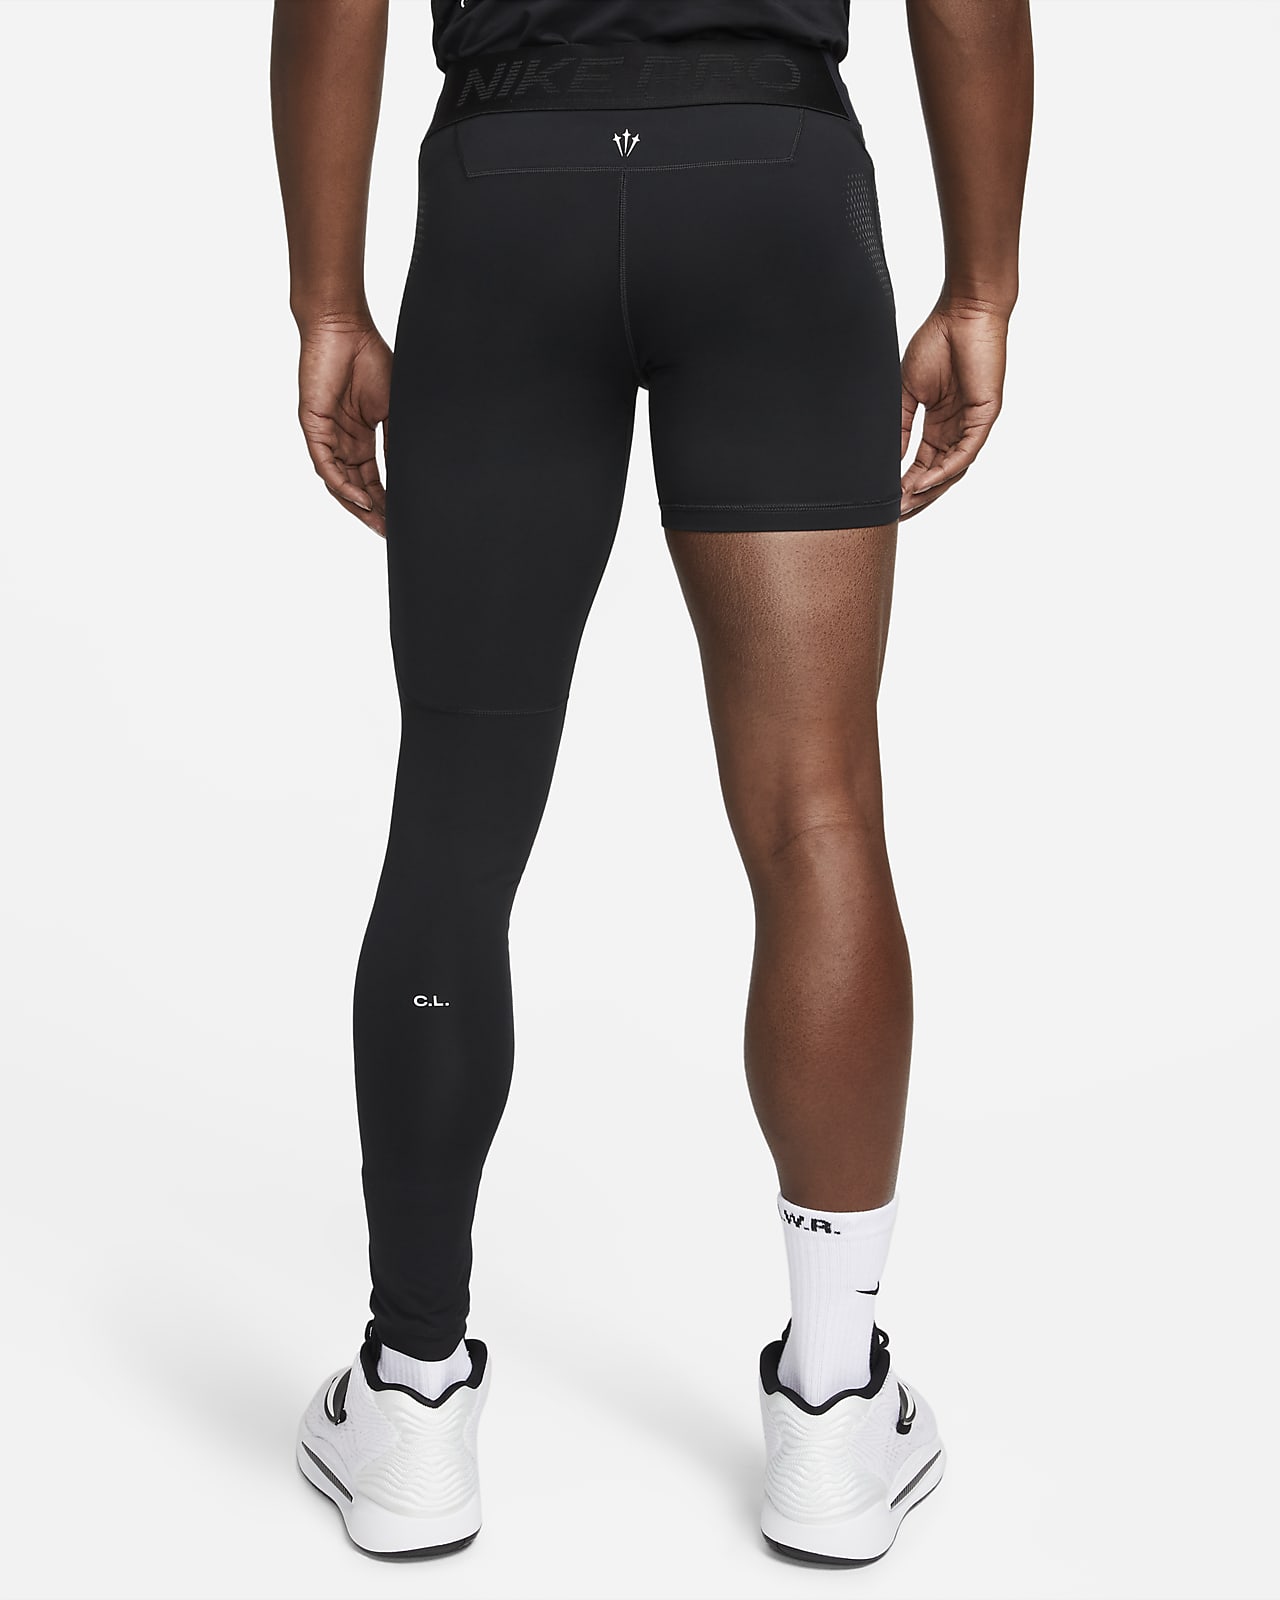 NOCTA Men's Single-Leg Tights (Left). Nike MY